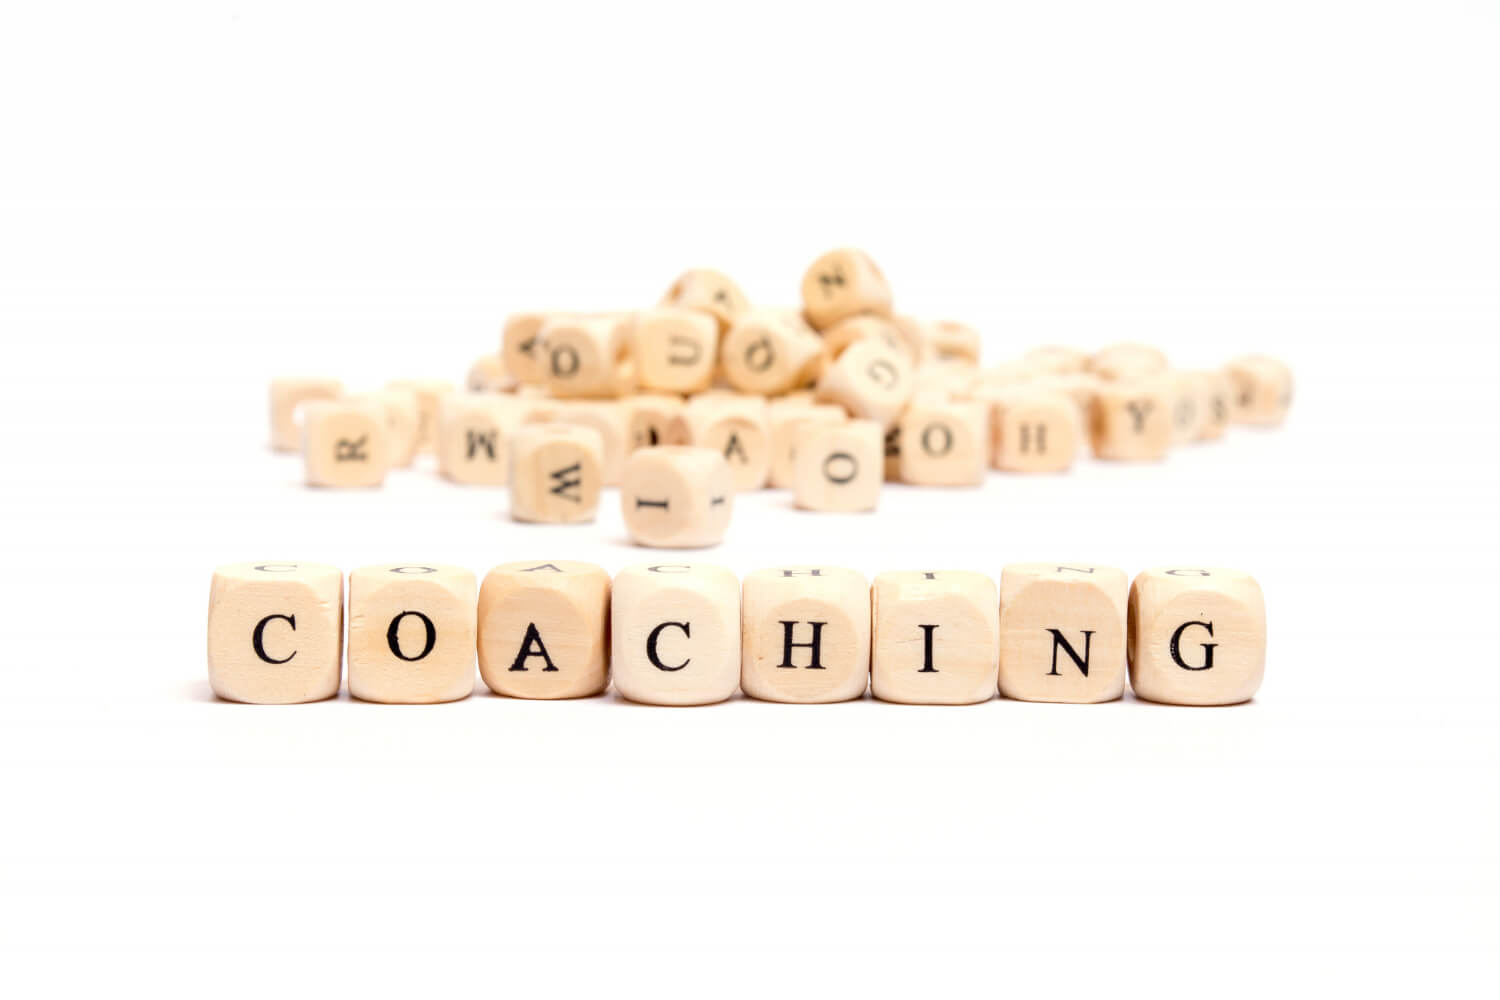 Petits cubes avec inscrits dessus : "coaching"